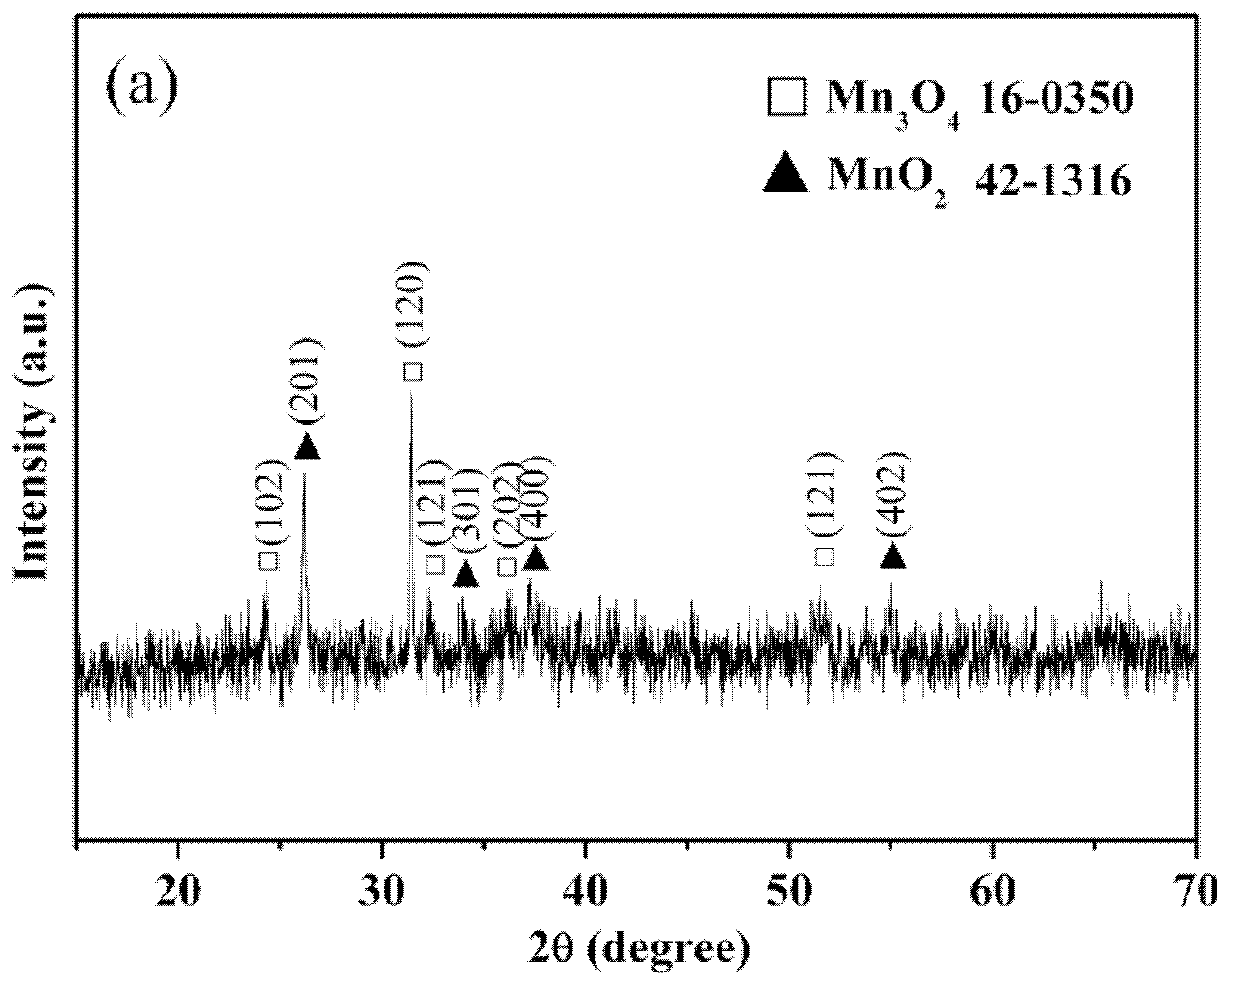 Mn3O4-MnO2 nano rod composite oxide as well as preparation method and application of Mn3O4-MnO2 nano rod composite oxide